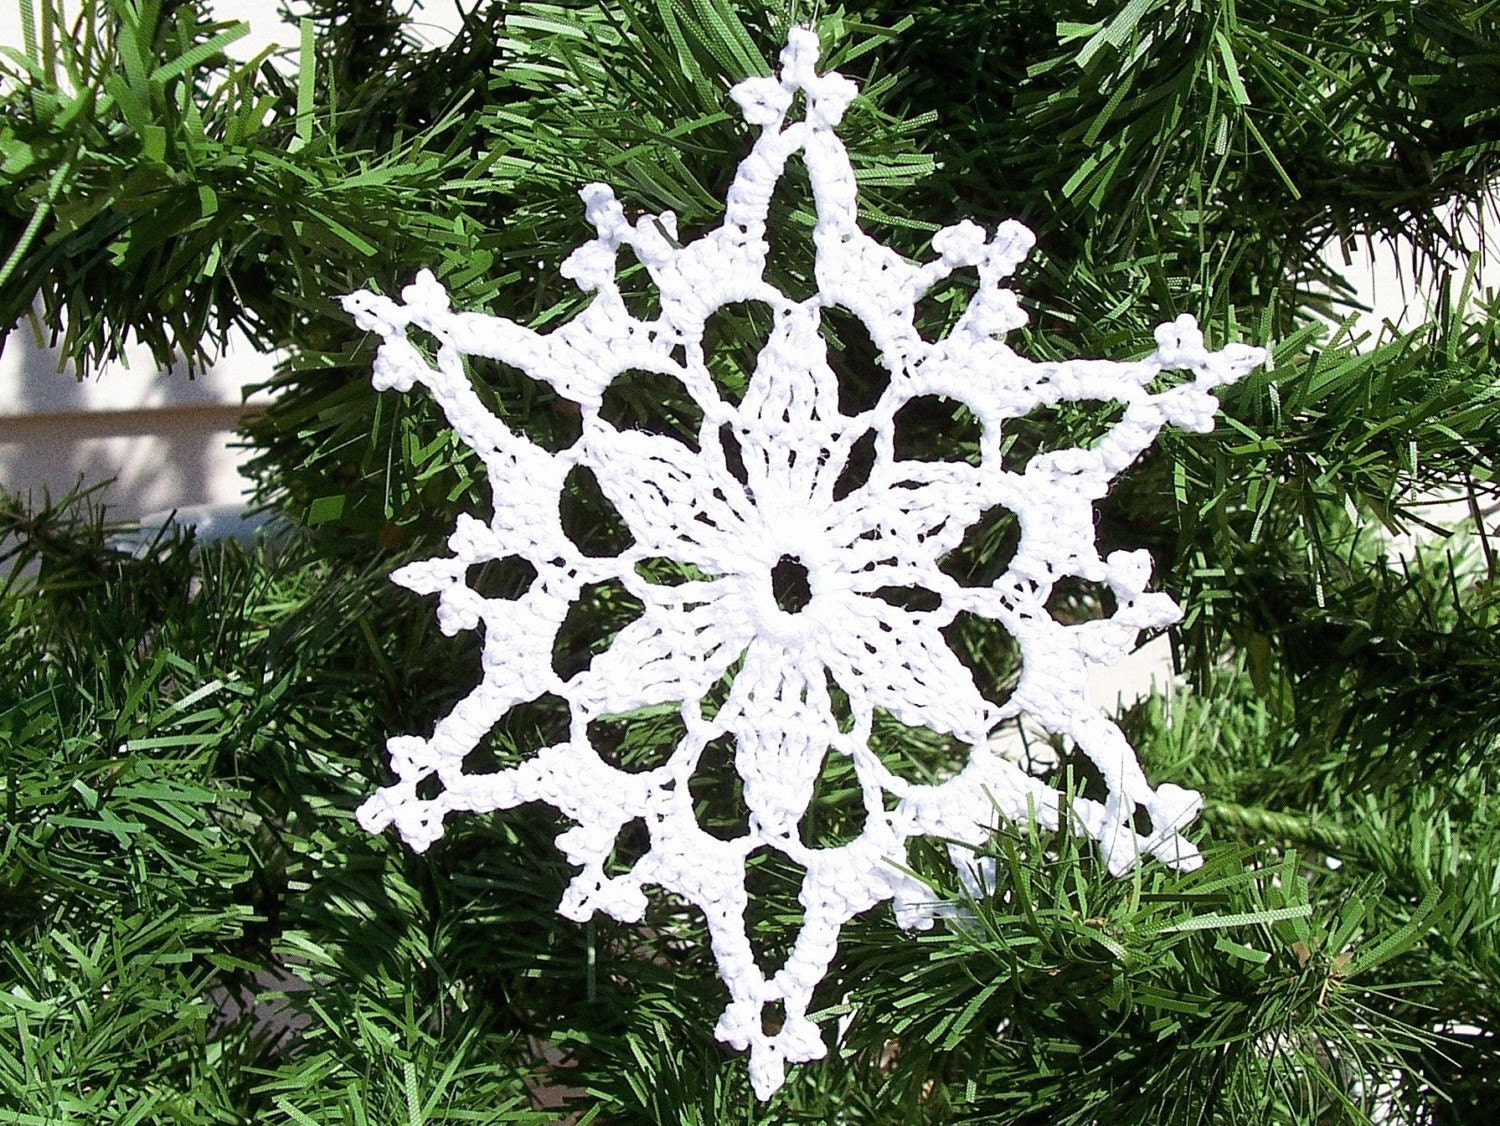 Free Crochet Snowflake Pattern, V
intage Crochet Patterns